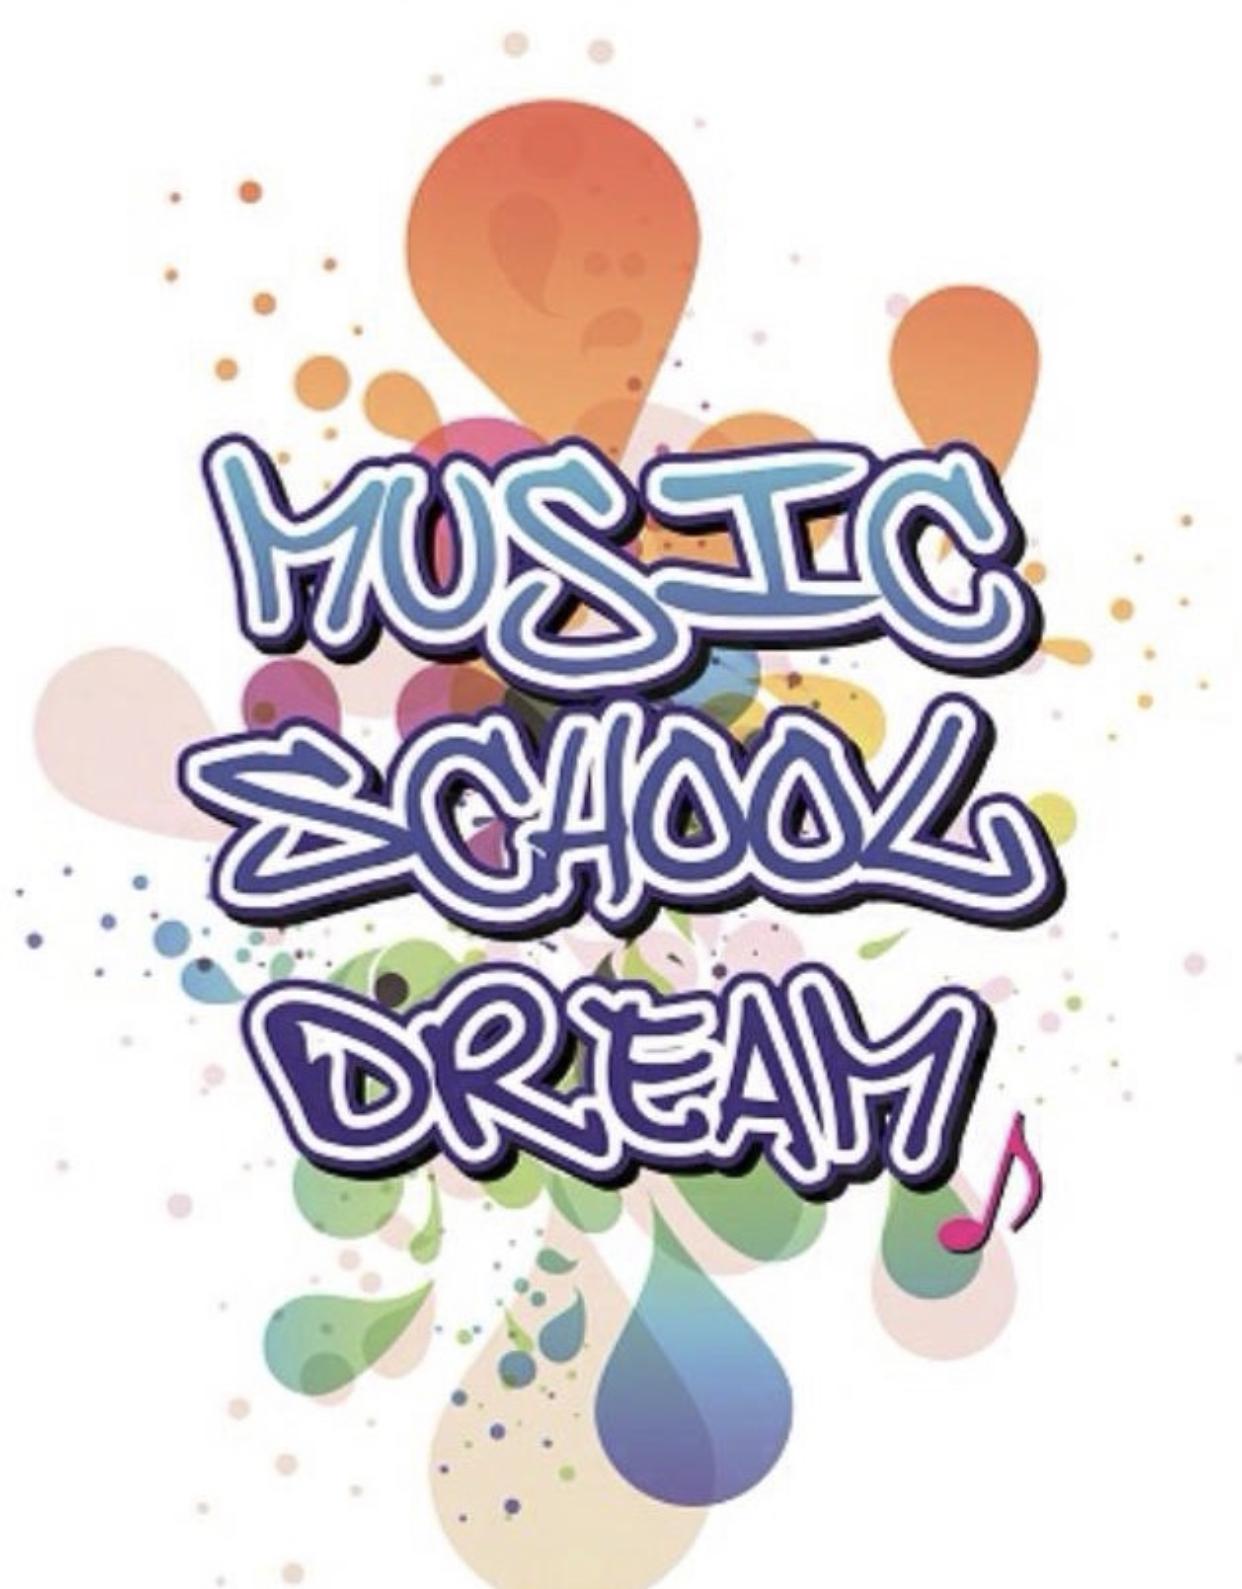 Music School Dream